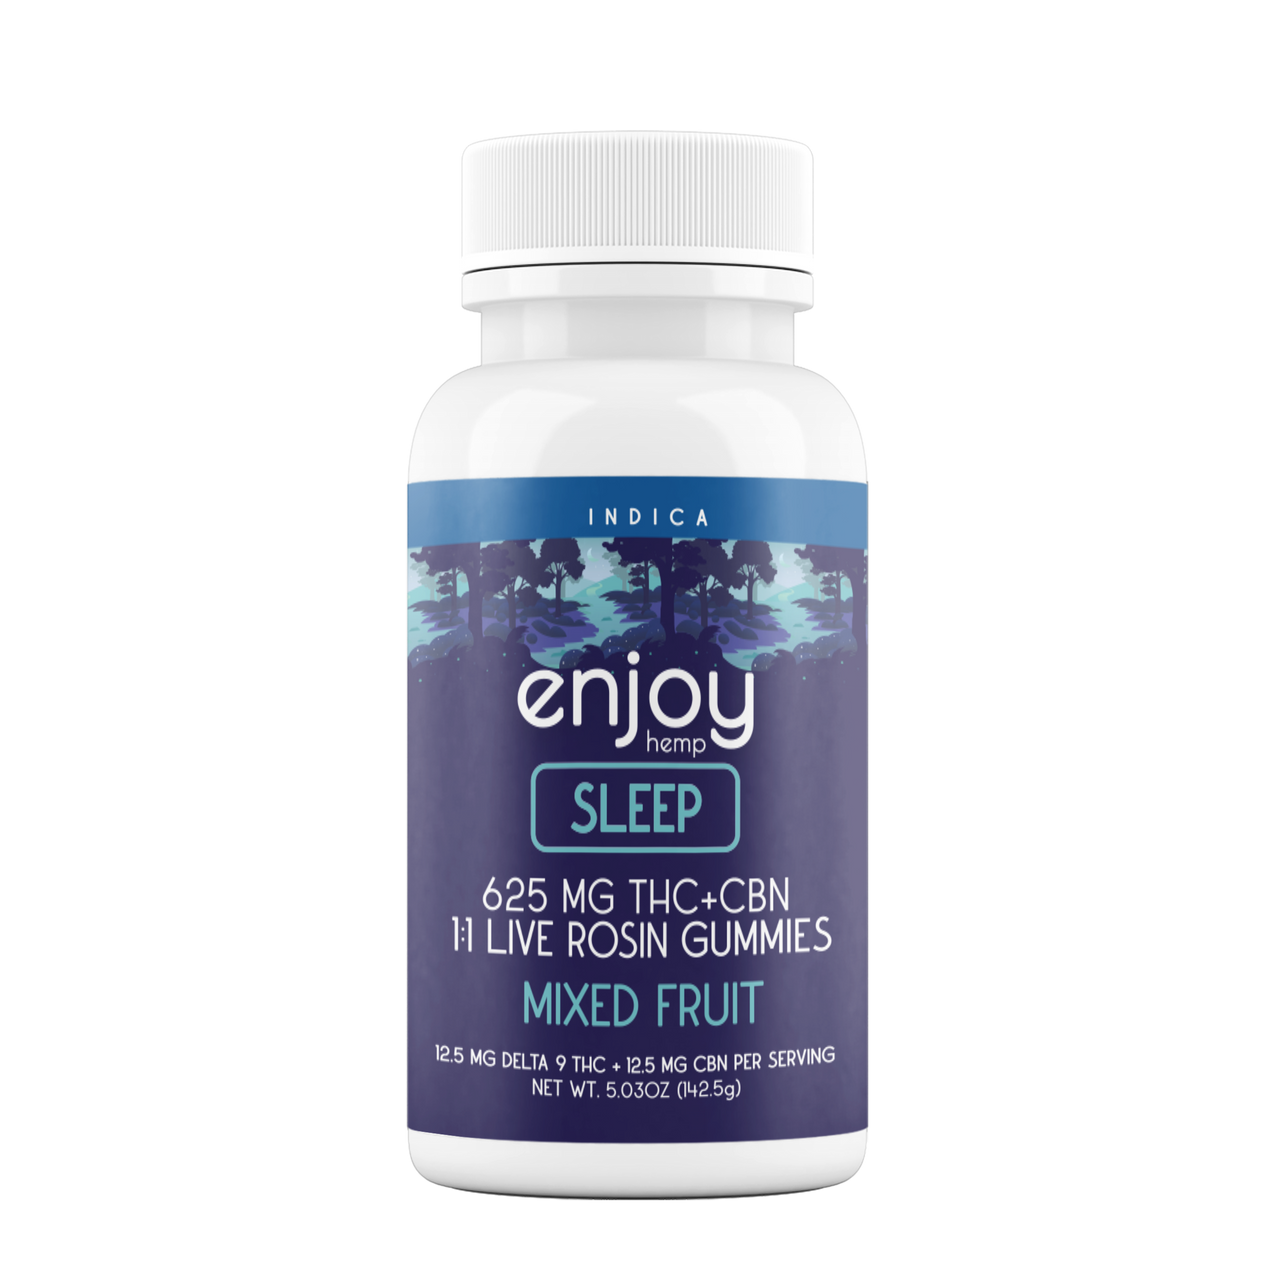 Enjoy Hemp 625mg Sleep 1:1 Live Rosin Delta 9 THC/CBN Gummies - 25 mg each (Indica) Best Price